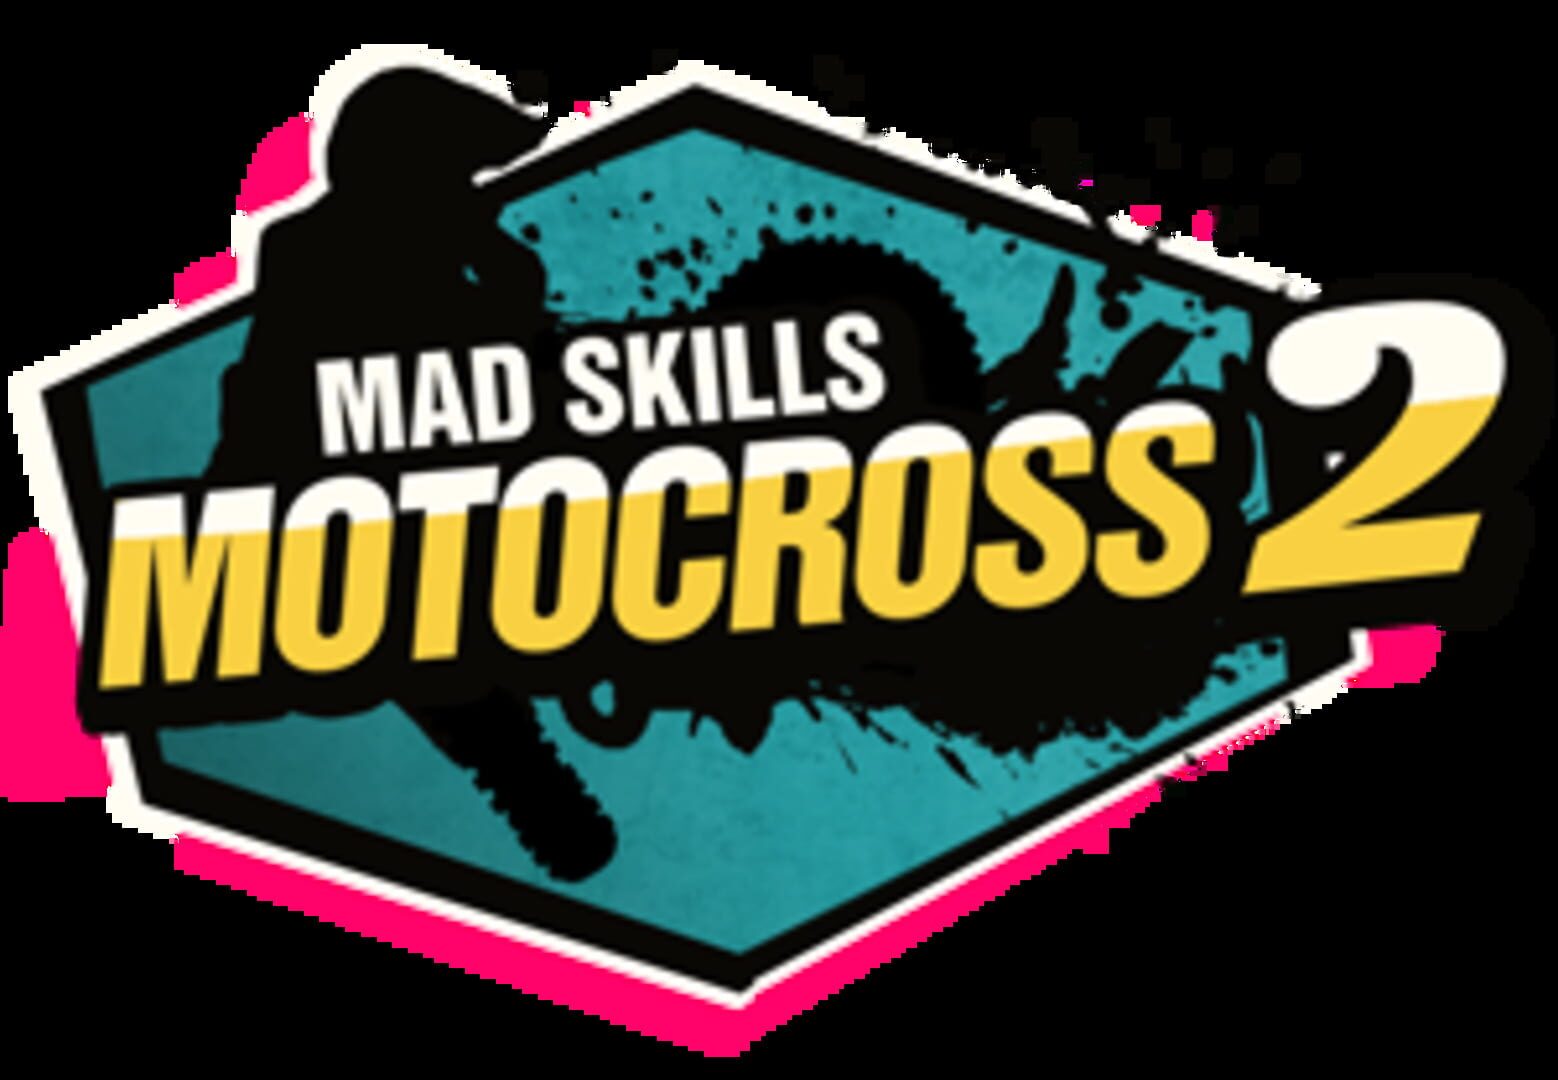 Mad Skills Motocross 2 screenshots